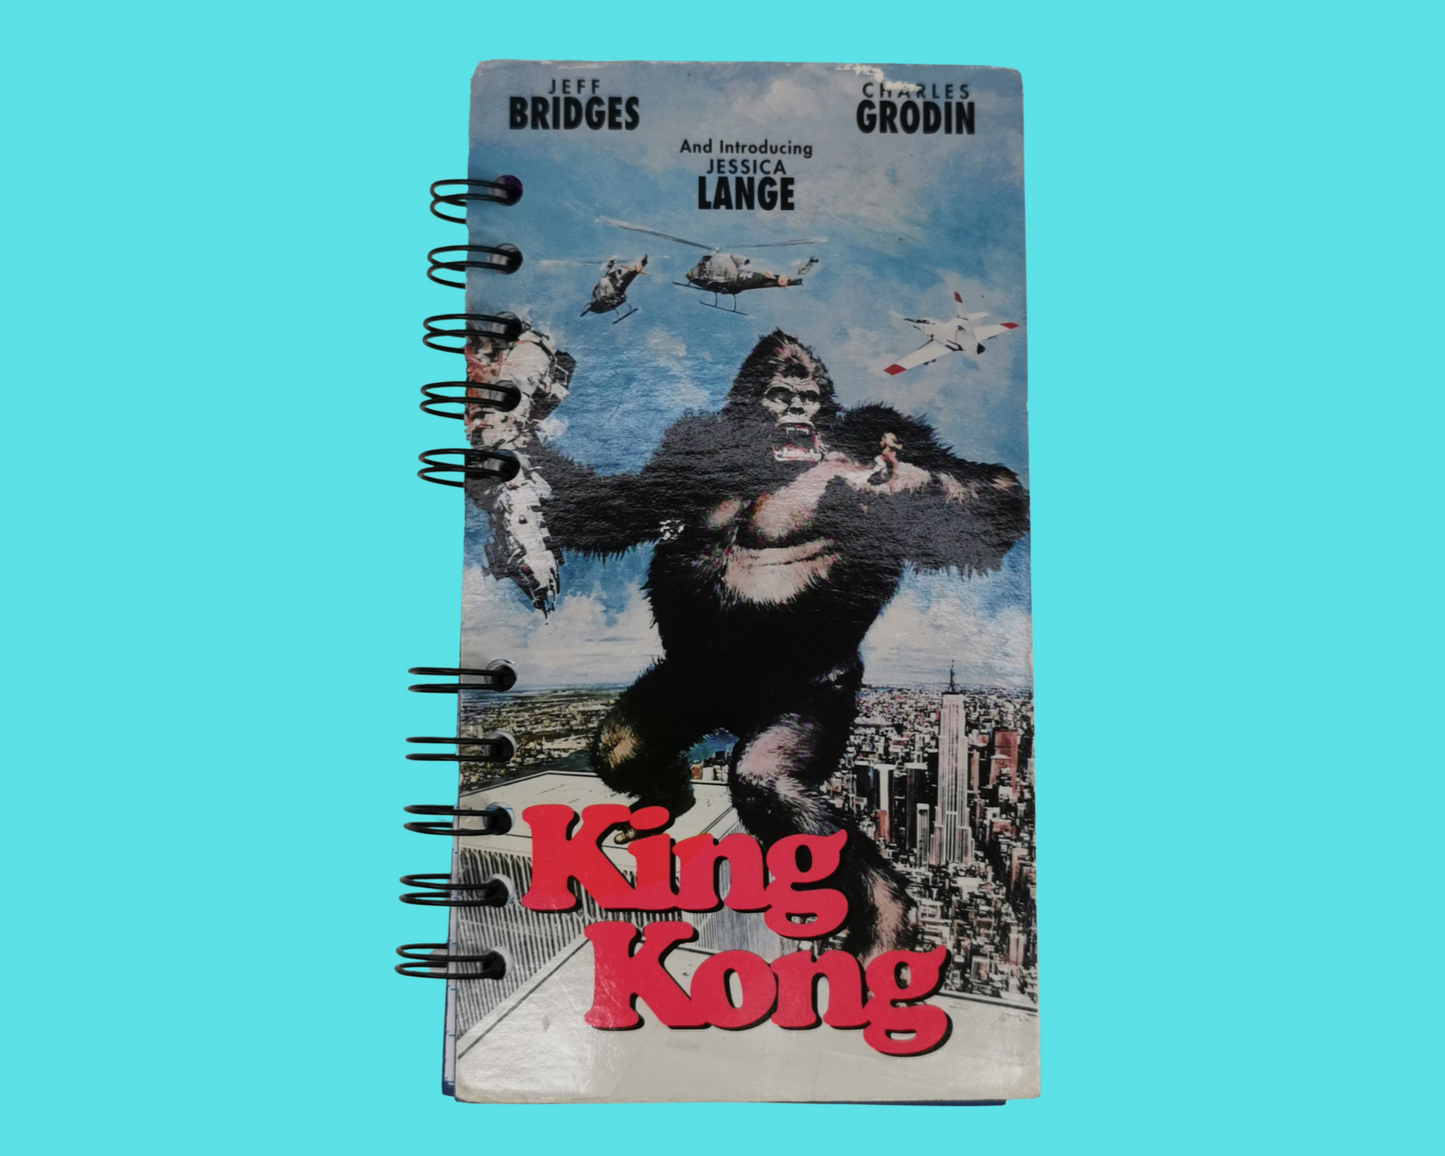 Cahier de film VHS recyclé King Kong